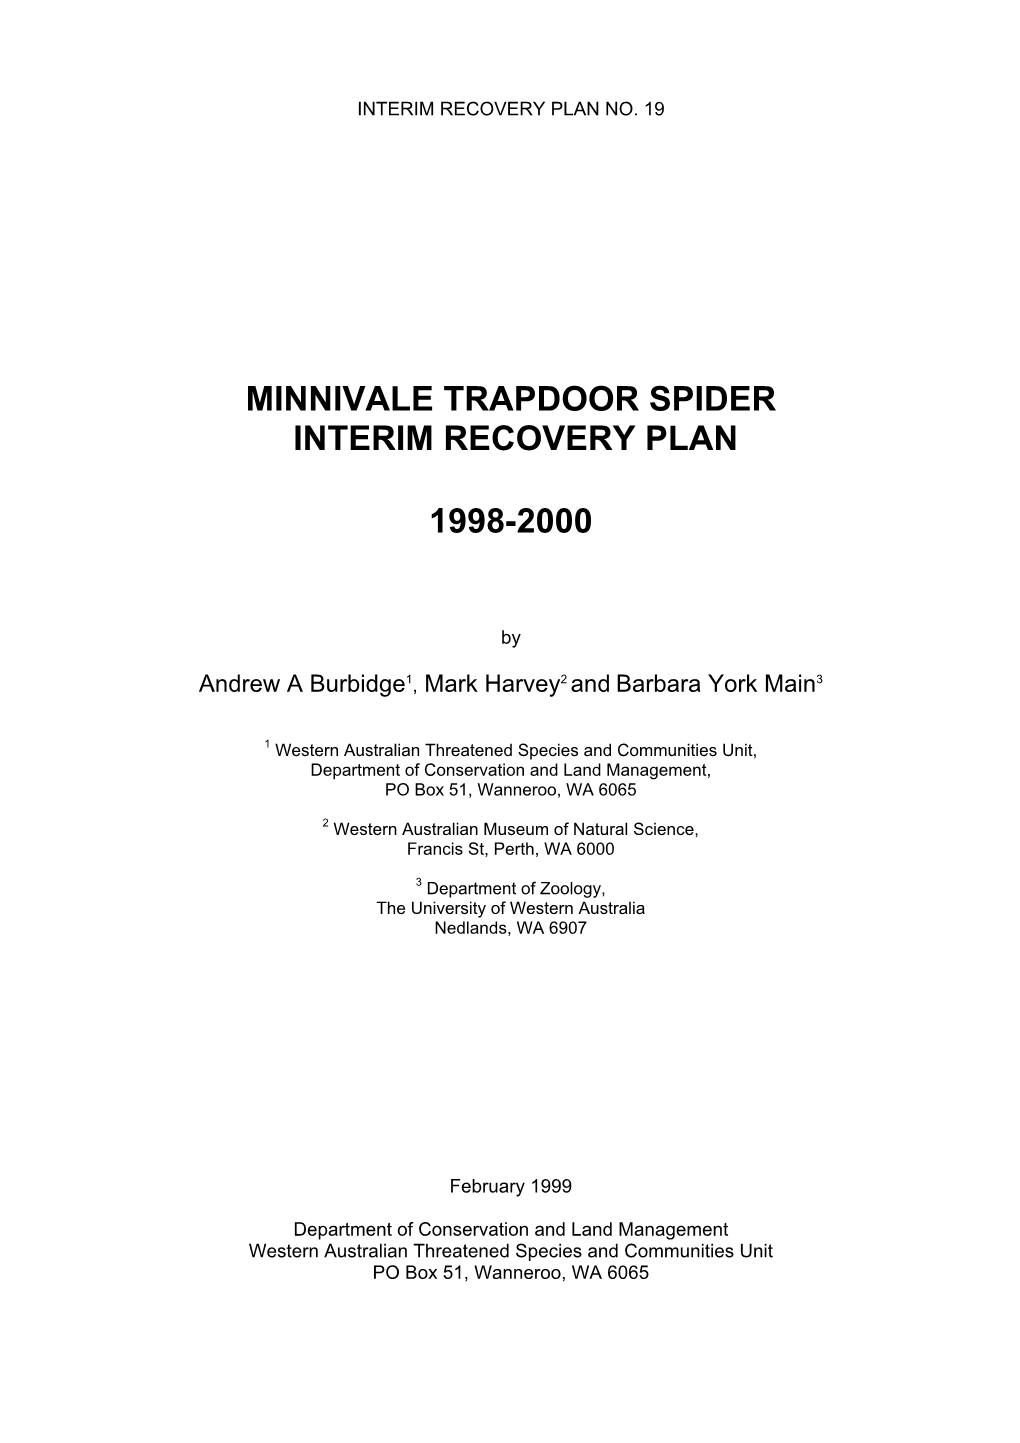 Minnivale Trapdoor Spider Interim Recovery Plan 1998-2000